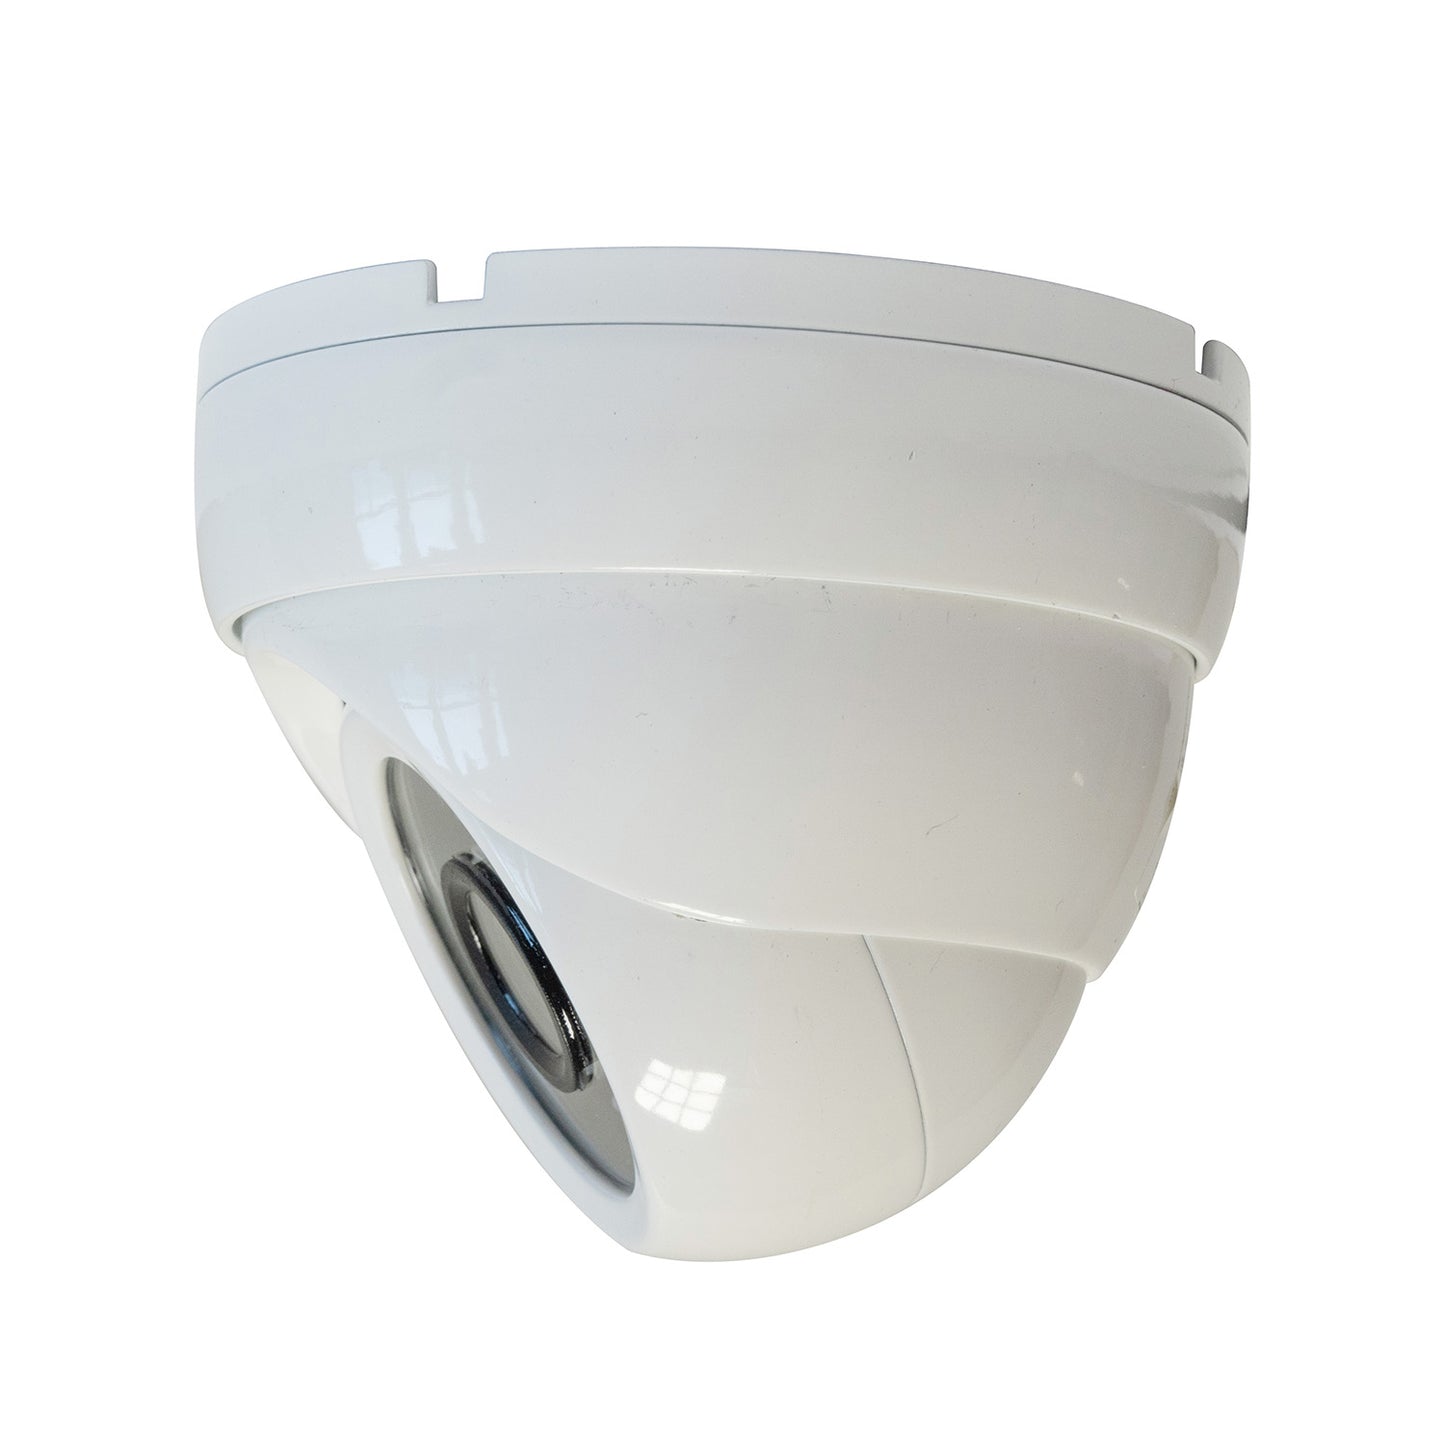 White surveillance camera